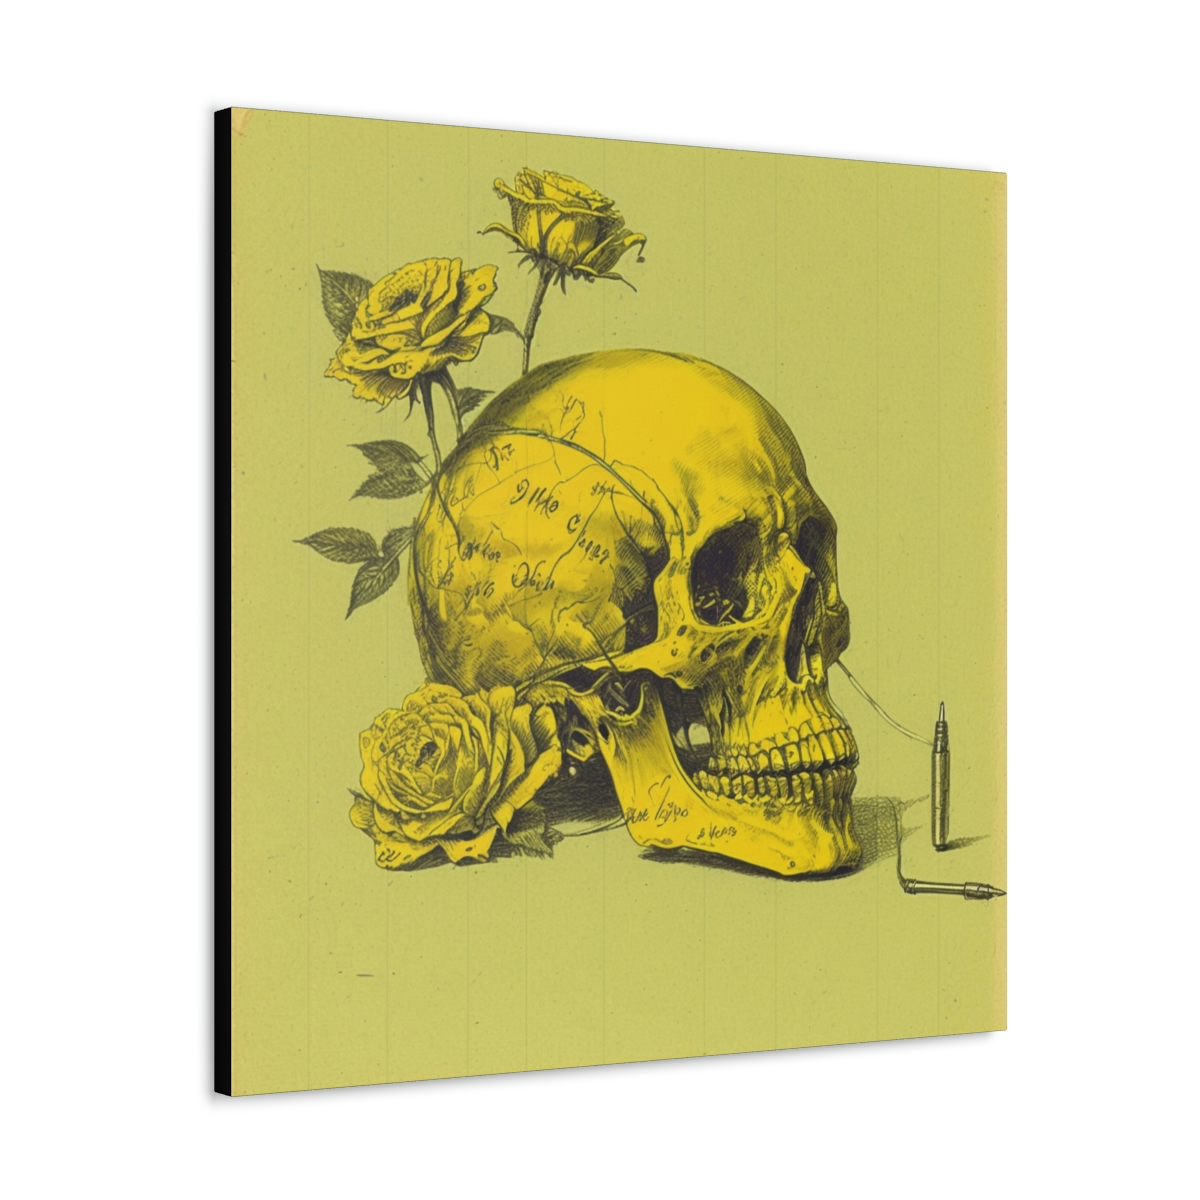 Skull Art Canvas Prints: Skull And Roses